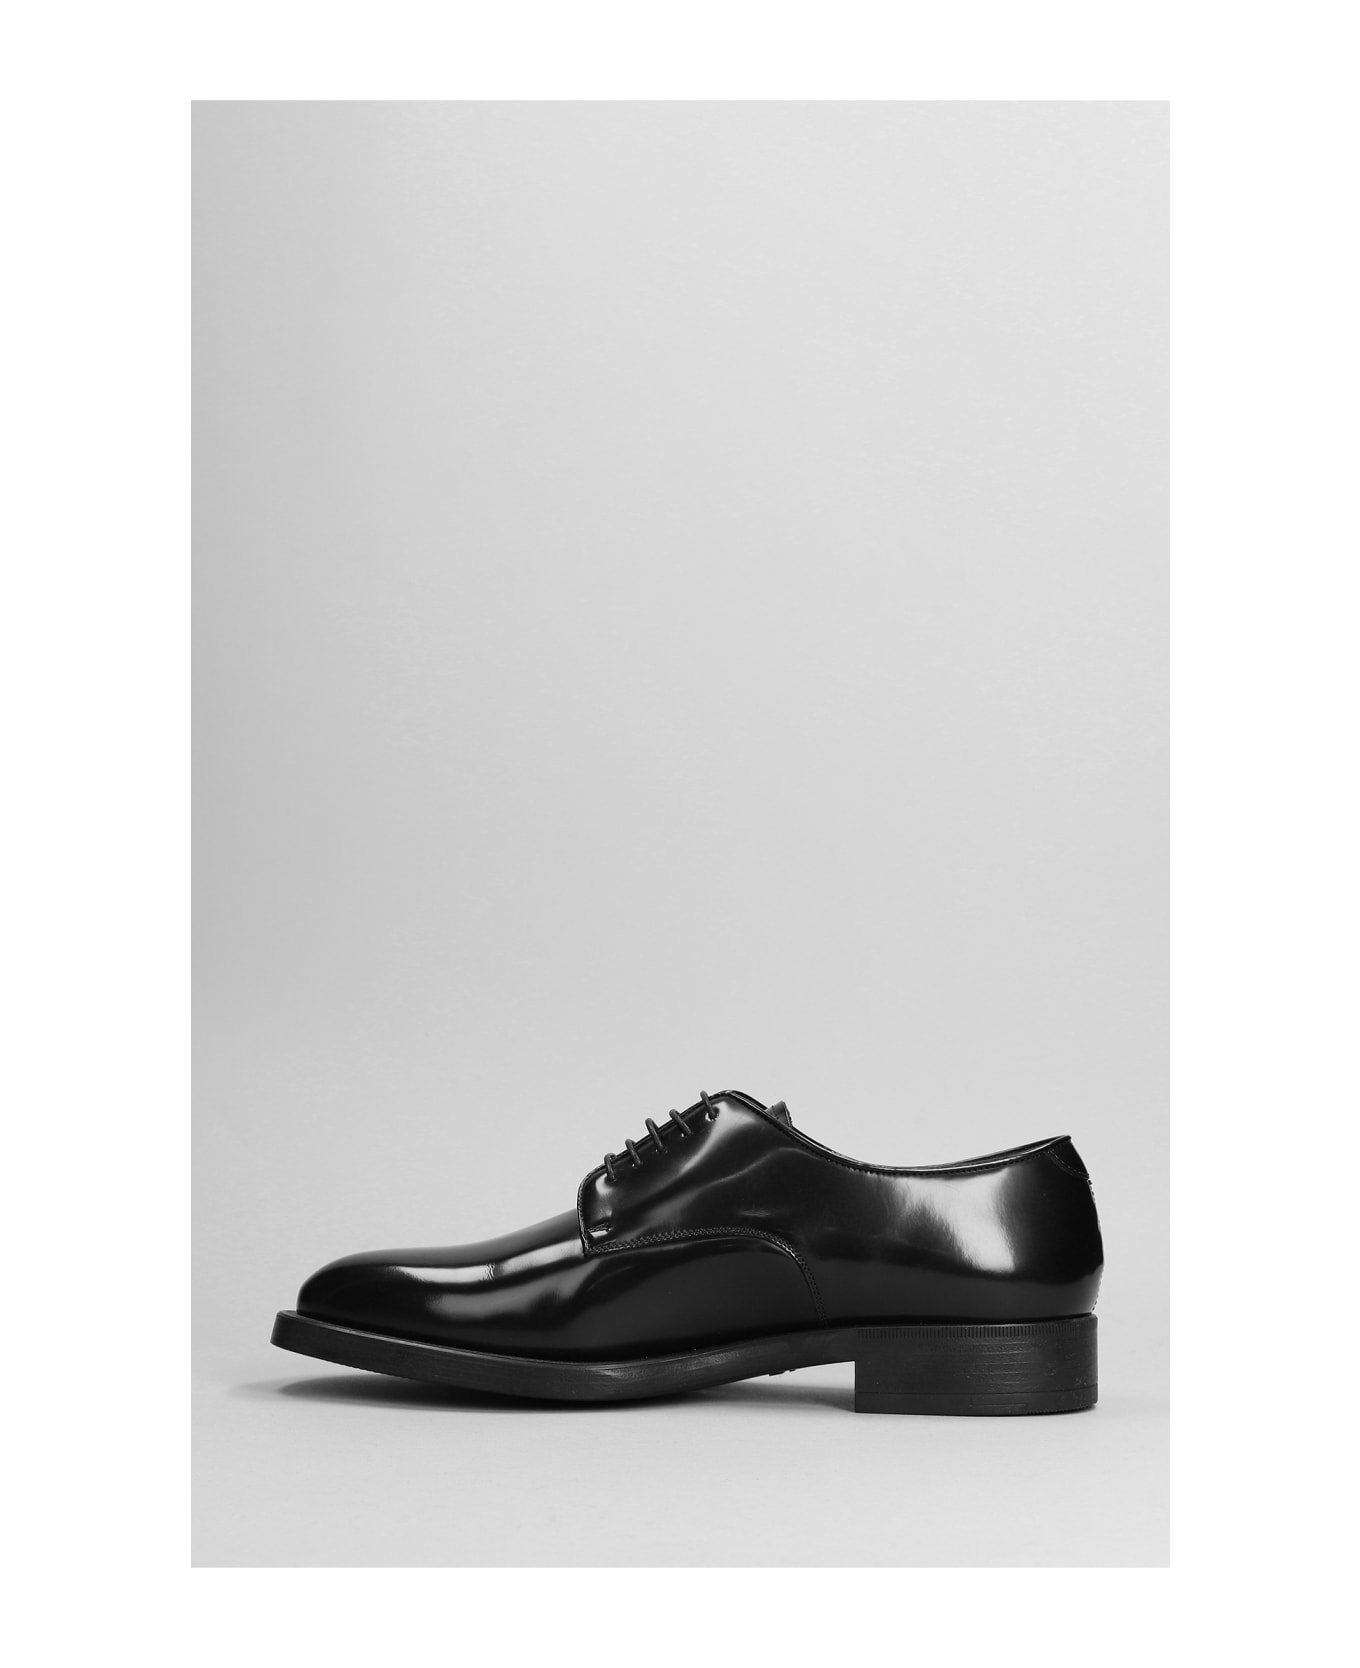 Giorgio Armani Lace Up Shoes In Black Leather - black